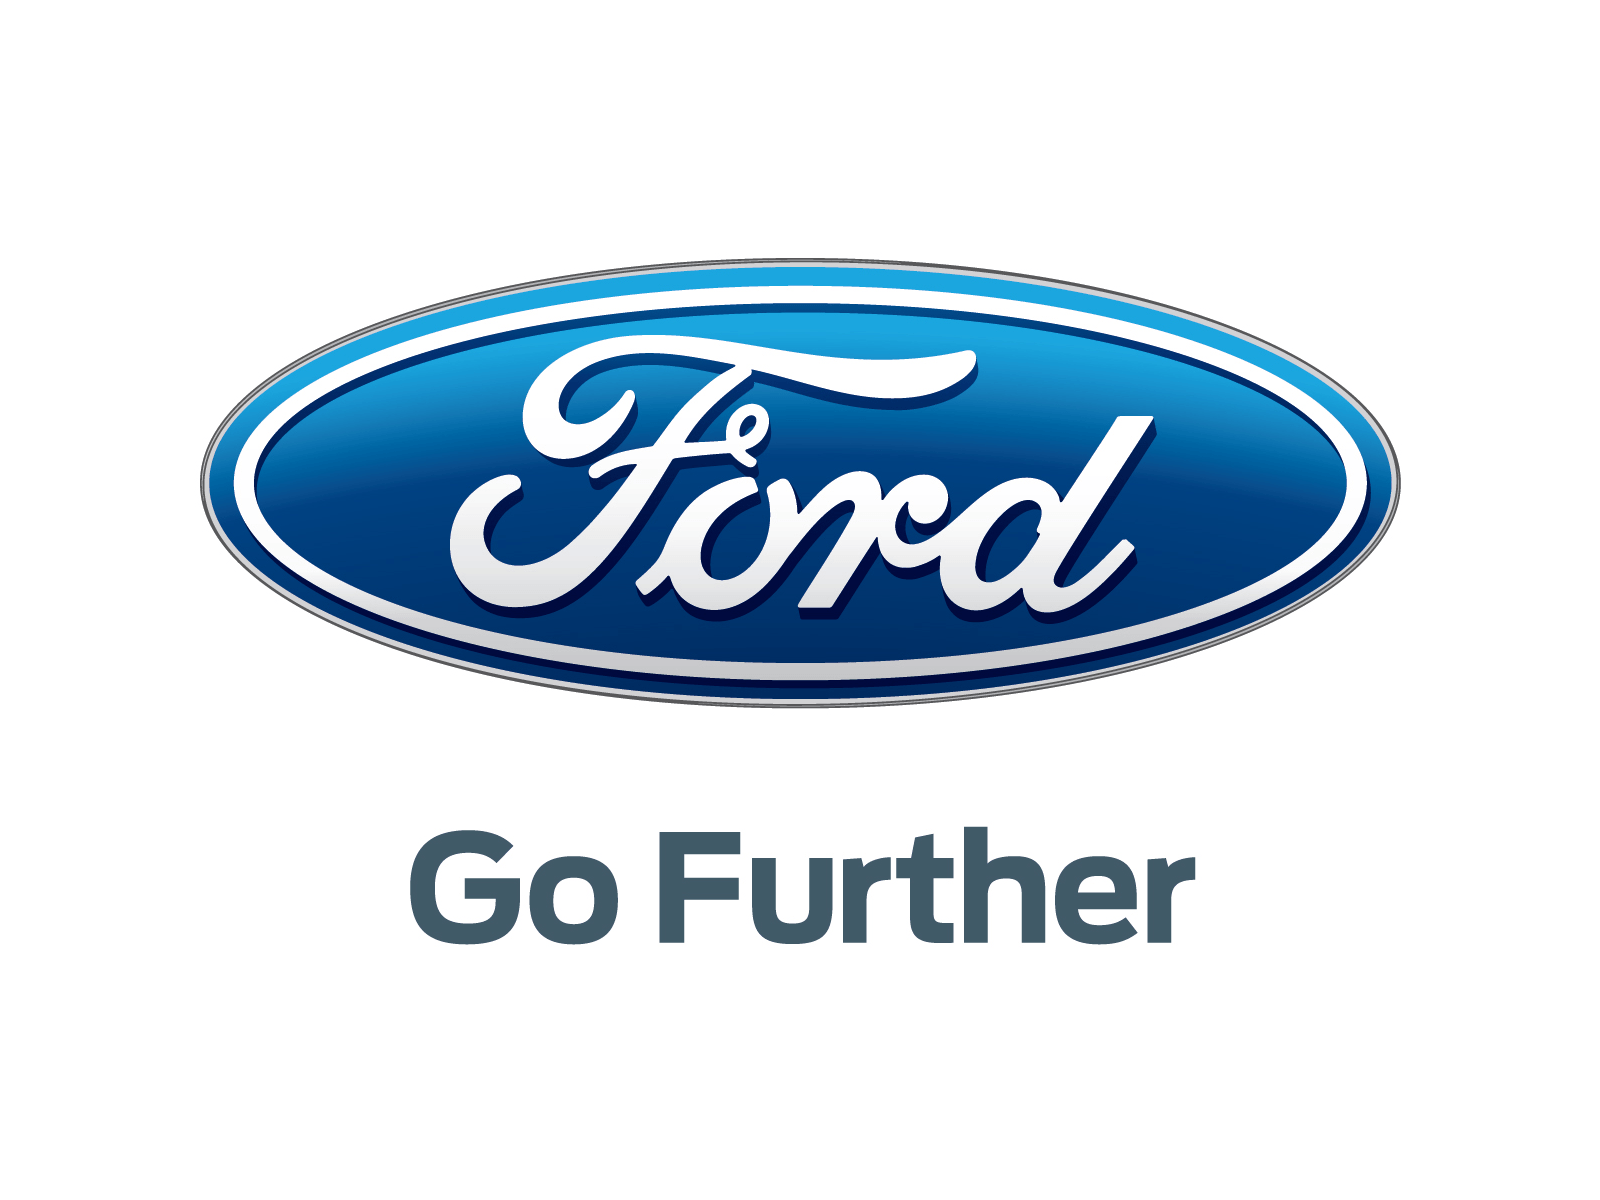 Ford Logo - Ford logo and slogan